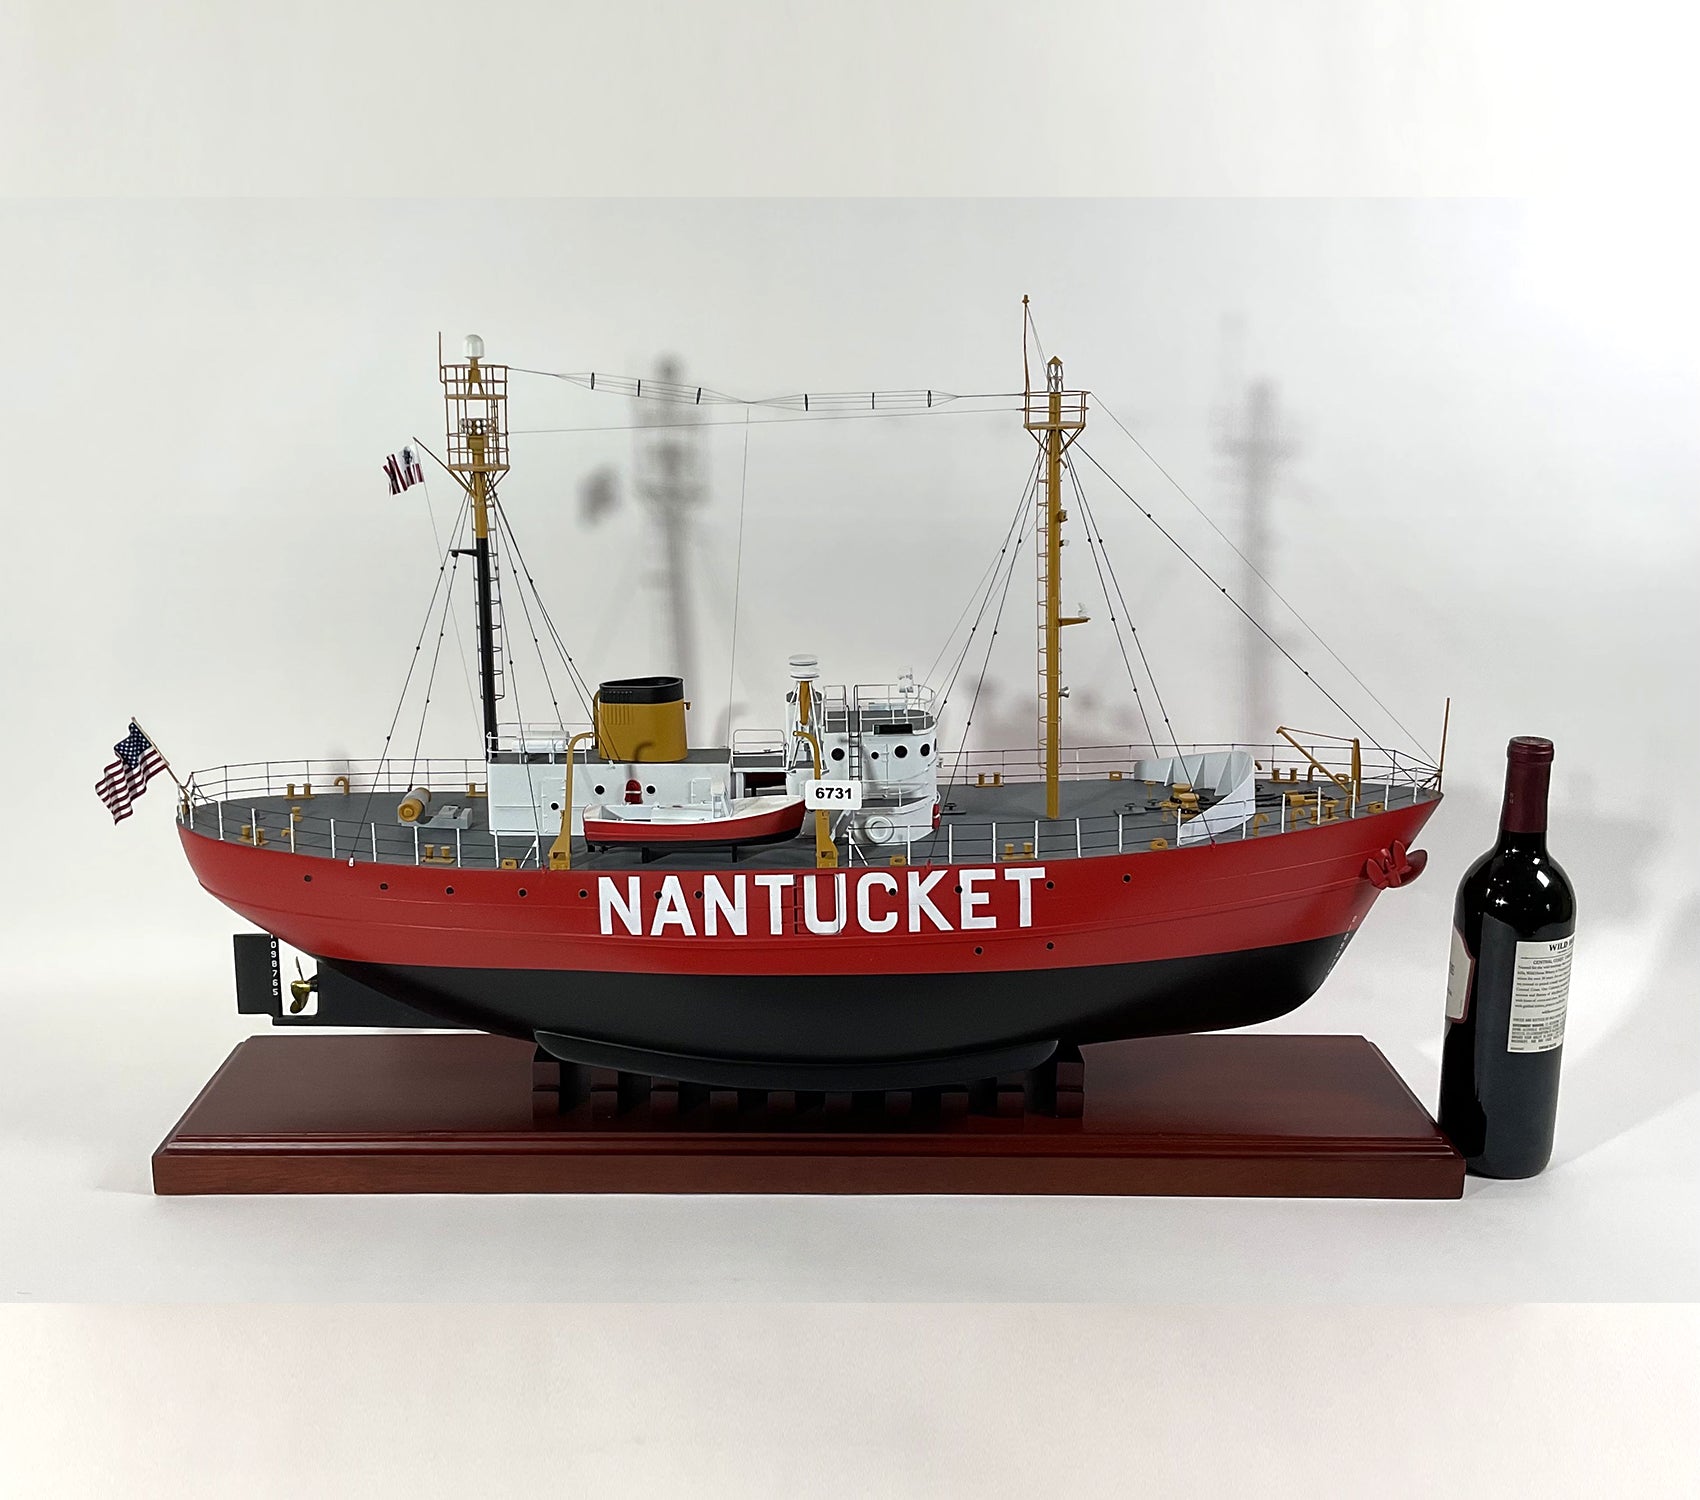 United States lightship Nantucket (WLV-612) - Wikipedia